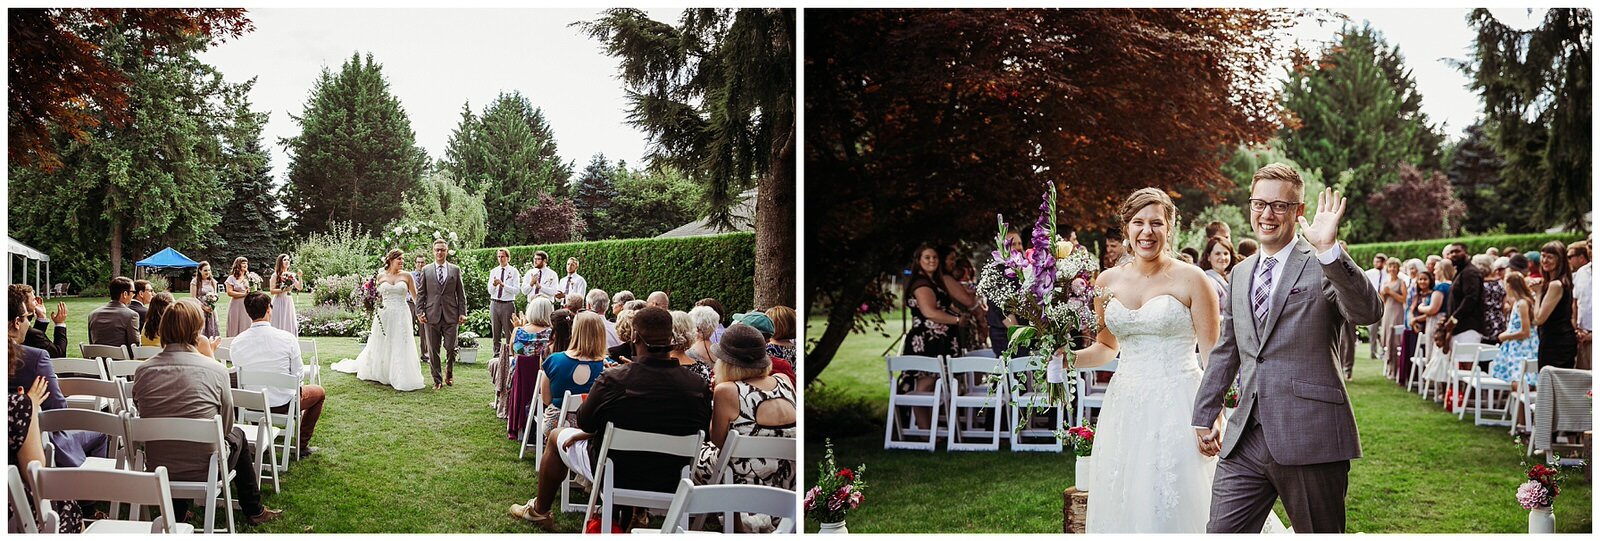 backyard+wedding+ceremony+chilliwack+abbotsford+photographer (43).jpg